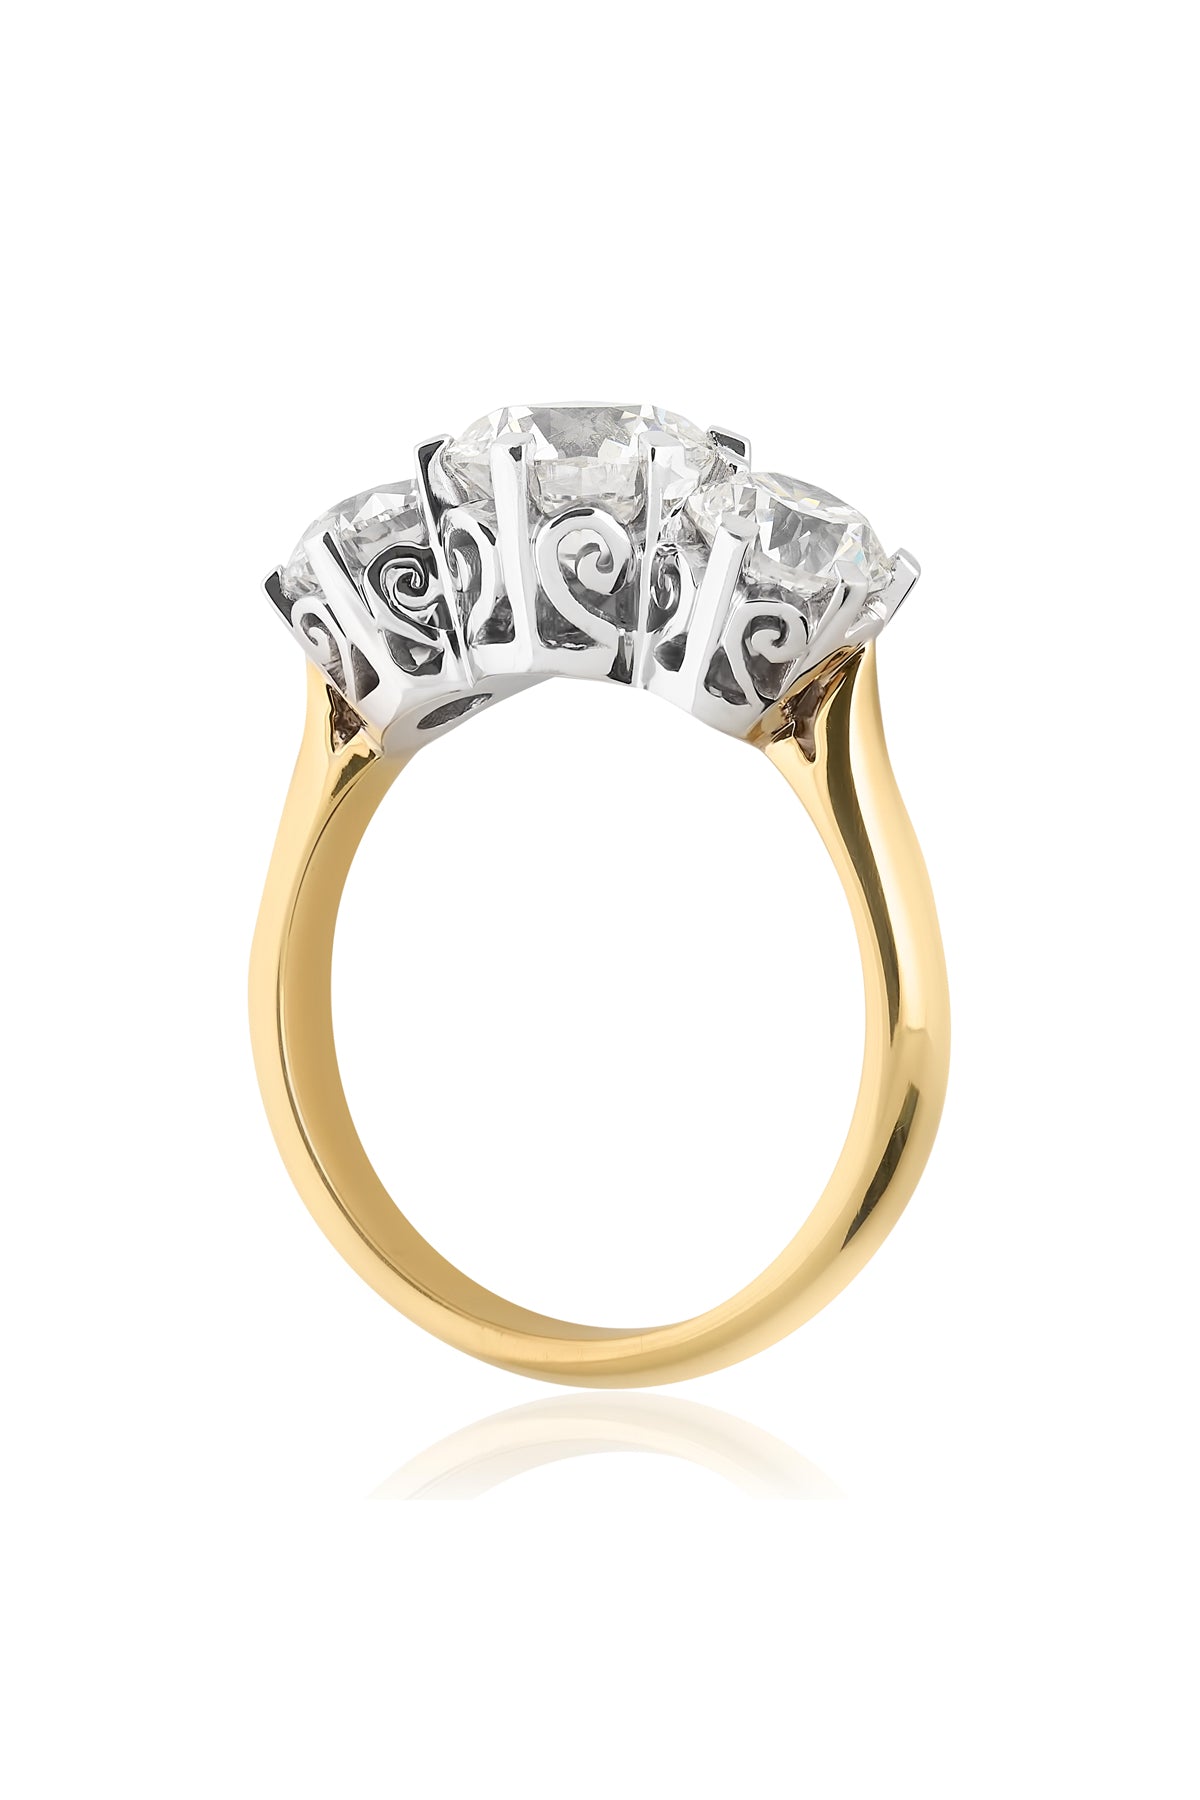 3.12 Carat Diamond Set Two Tone Ring from LeGassick Jewellery.